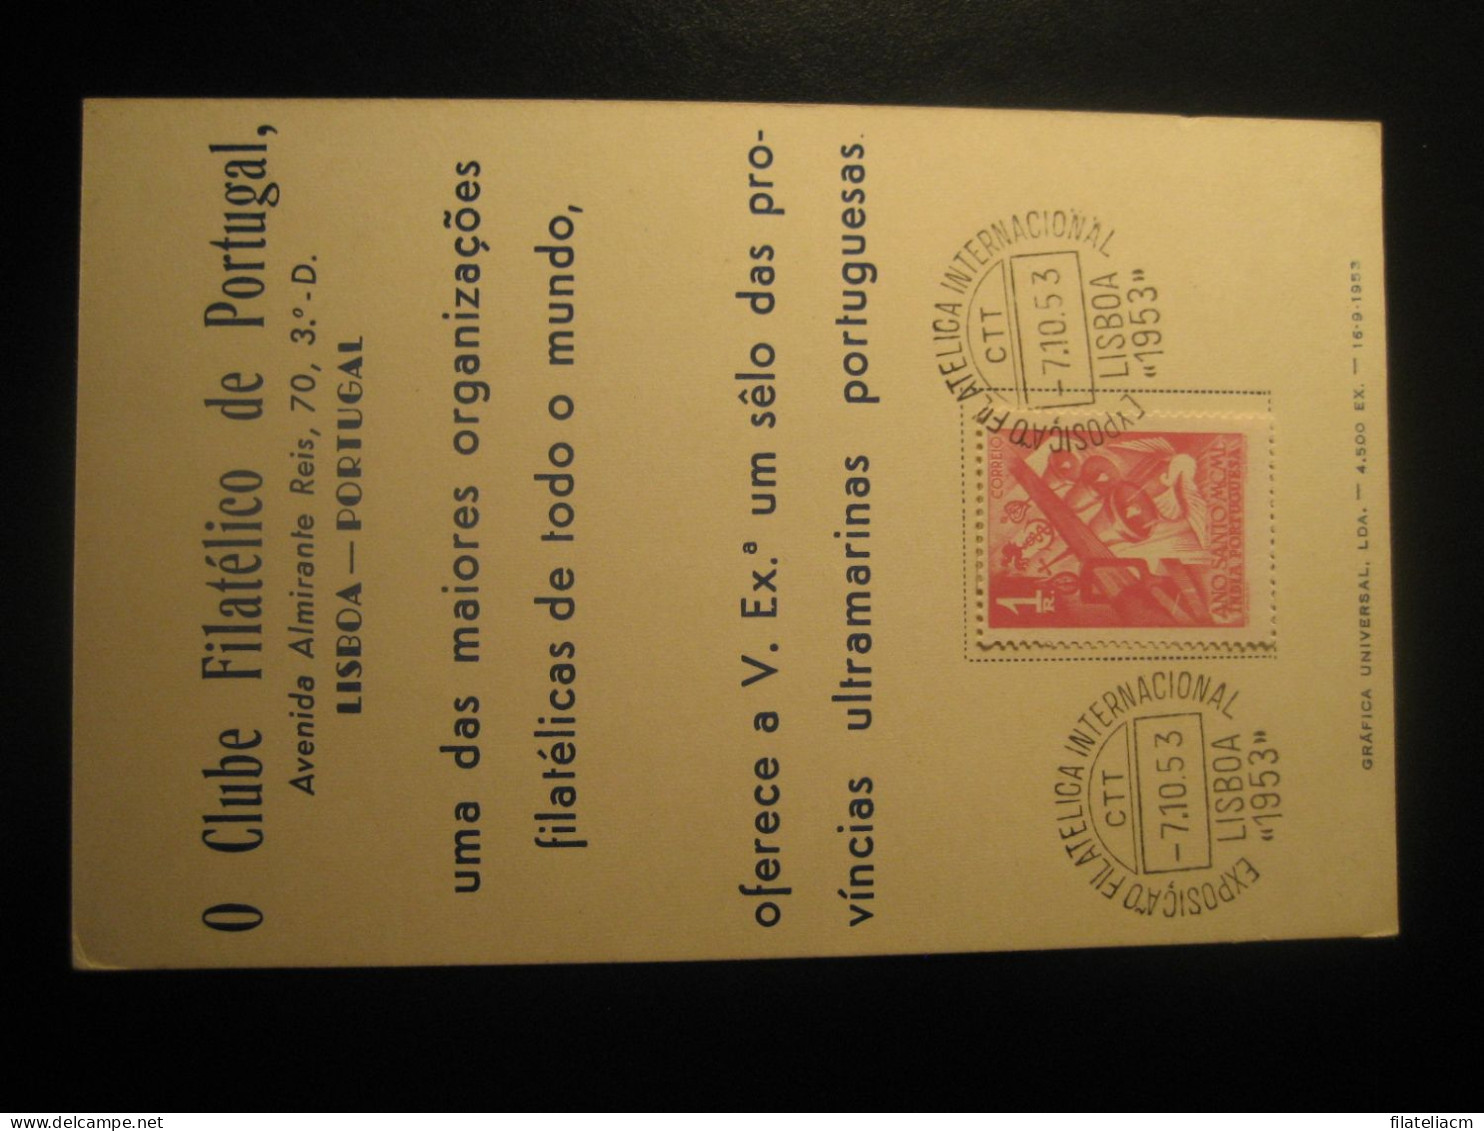 LISBOA 1953 Expo Fil. Int. Cancel Año Santo 1R Stamp Club Card Portuguese INDIA Colonies Portugal - Portuguese India